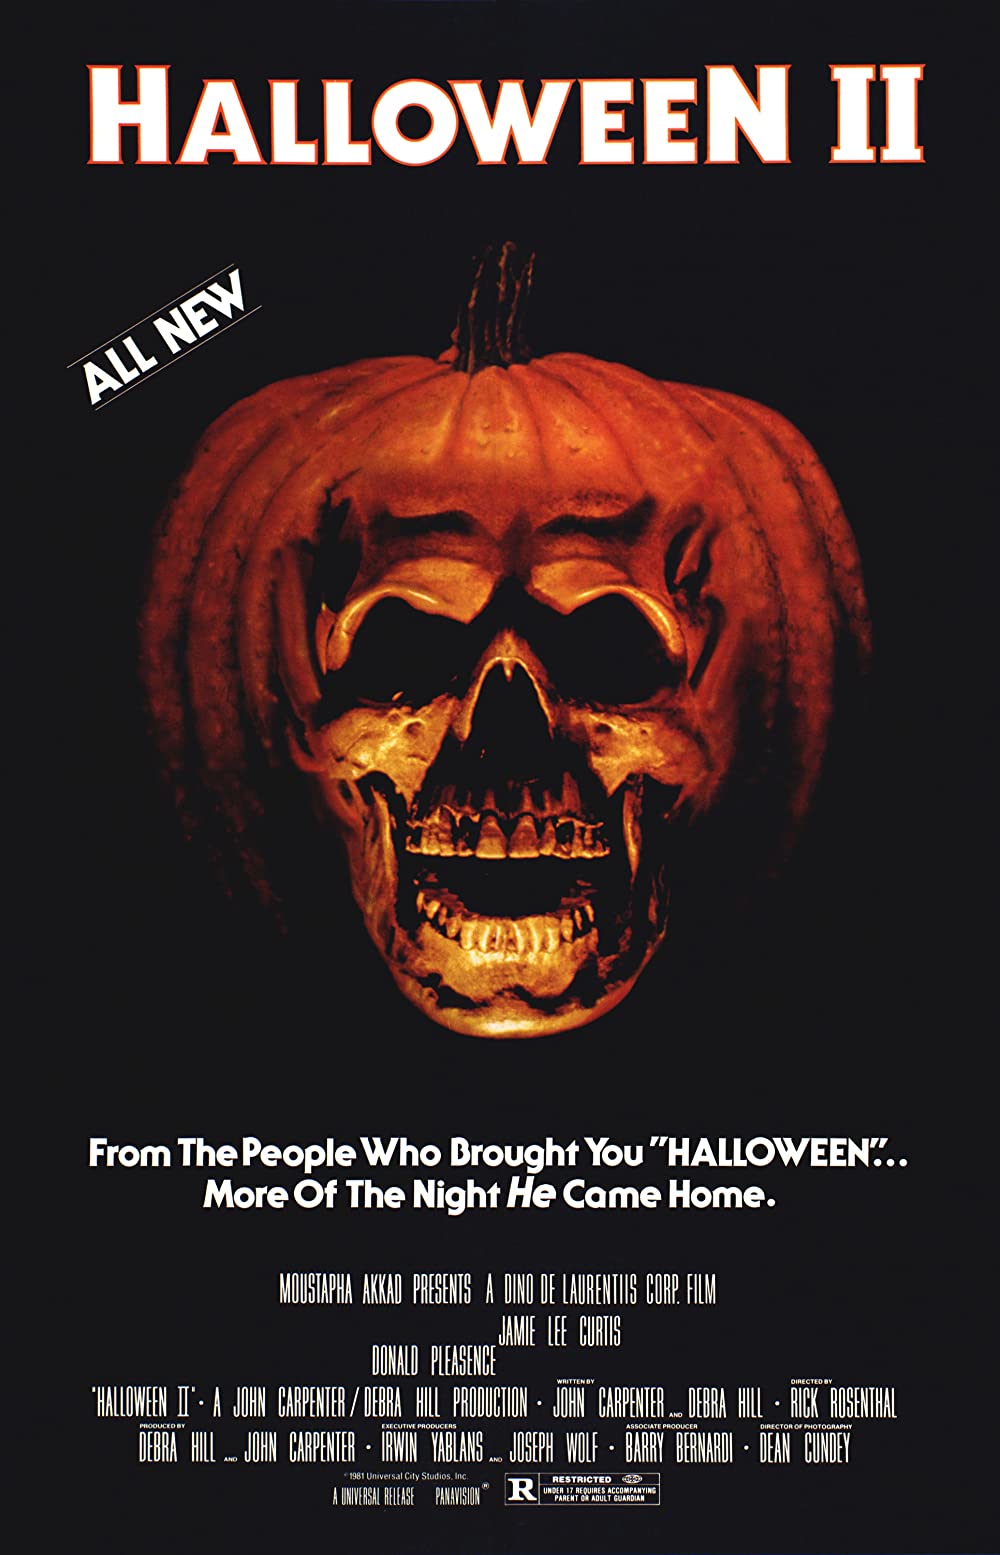 Filmbeschreibung zu Halloween II